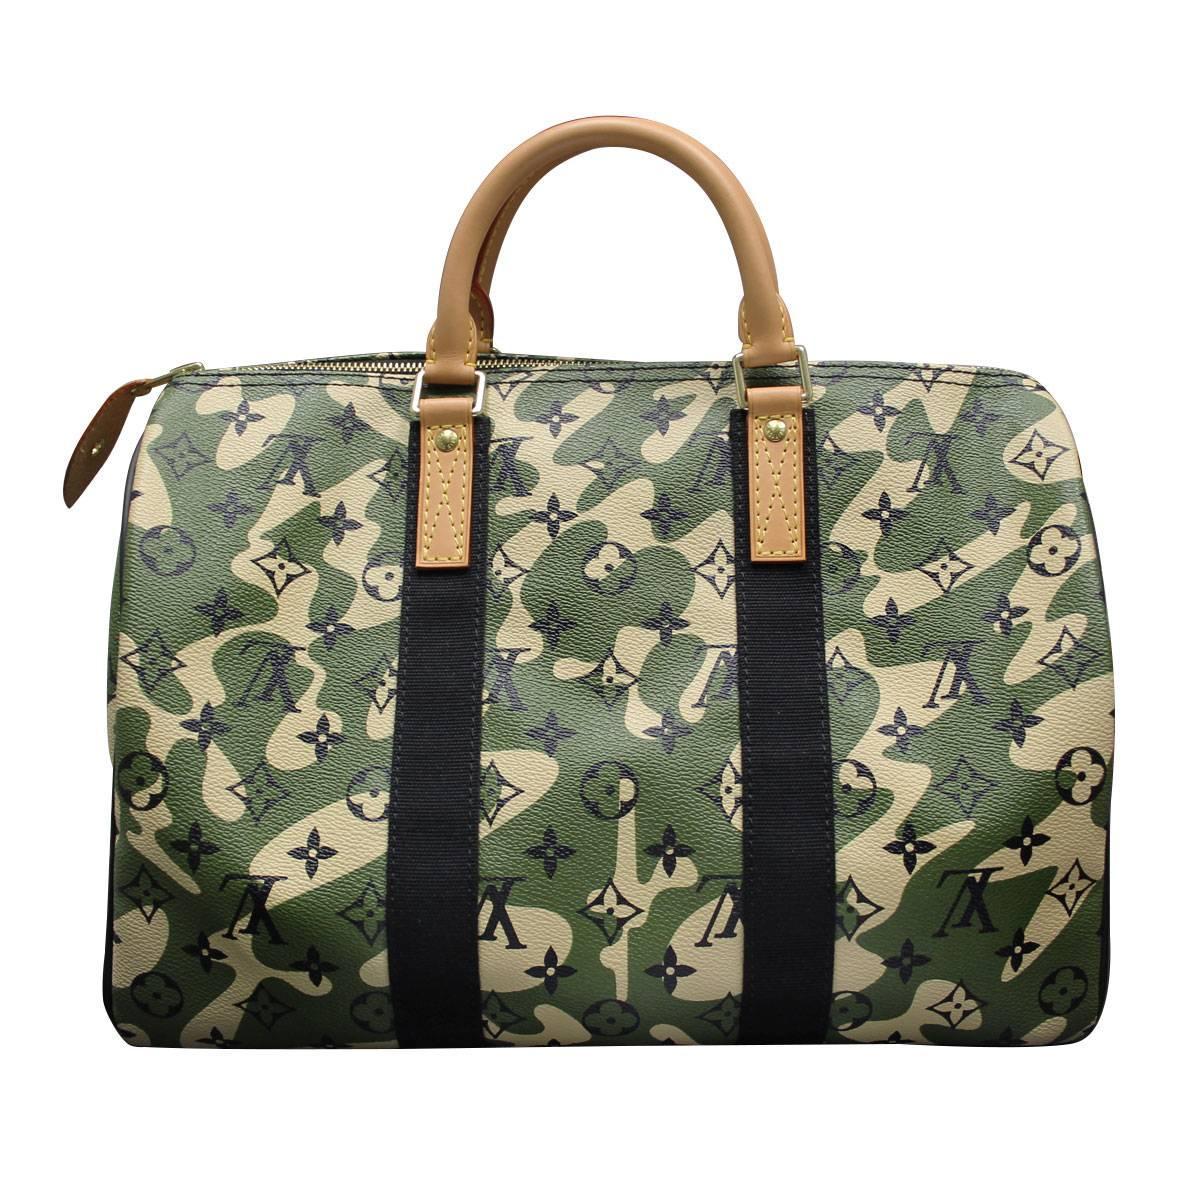 Louis Vuitton Speedy 35 Camouflage Monogramouflage Handbag in Box at 1stdibs